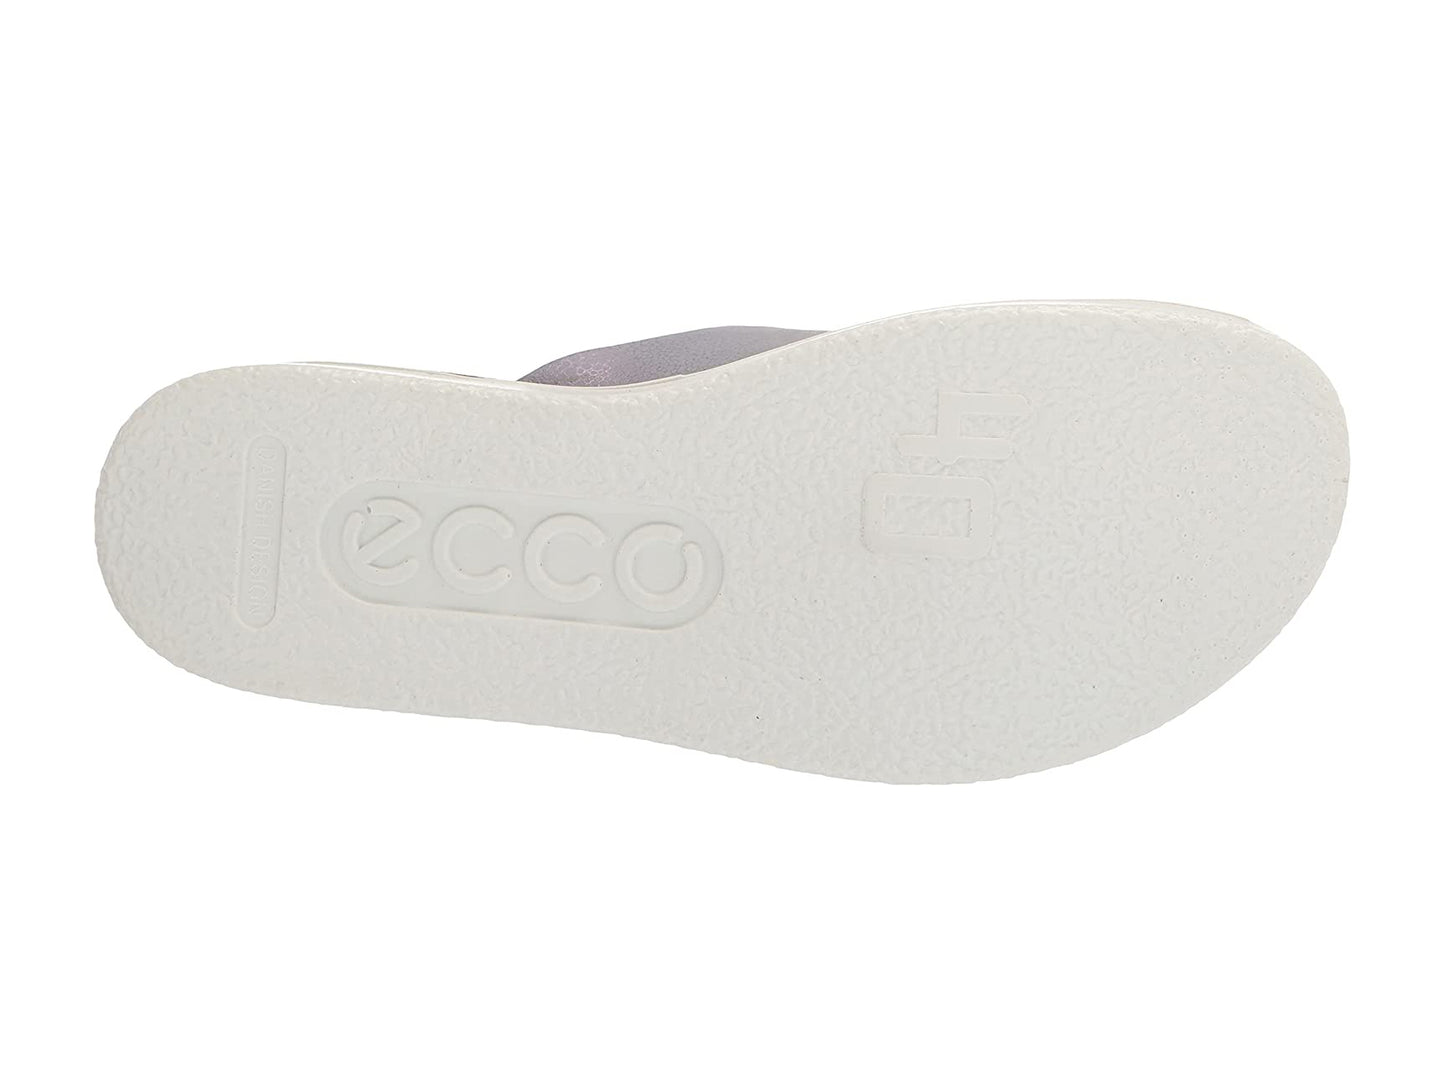 ECCO Womens Corksphere Thong Flip-Flop